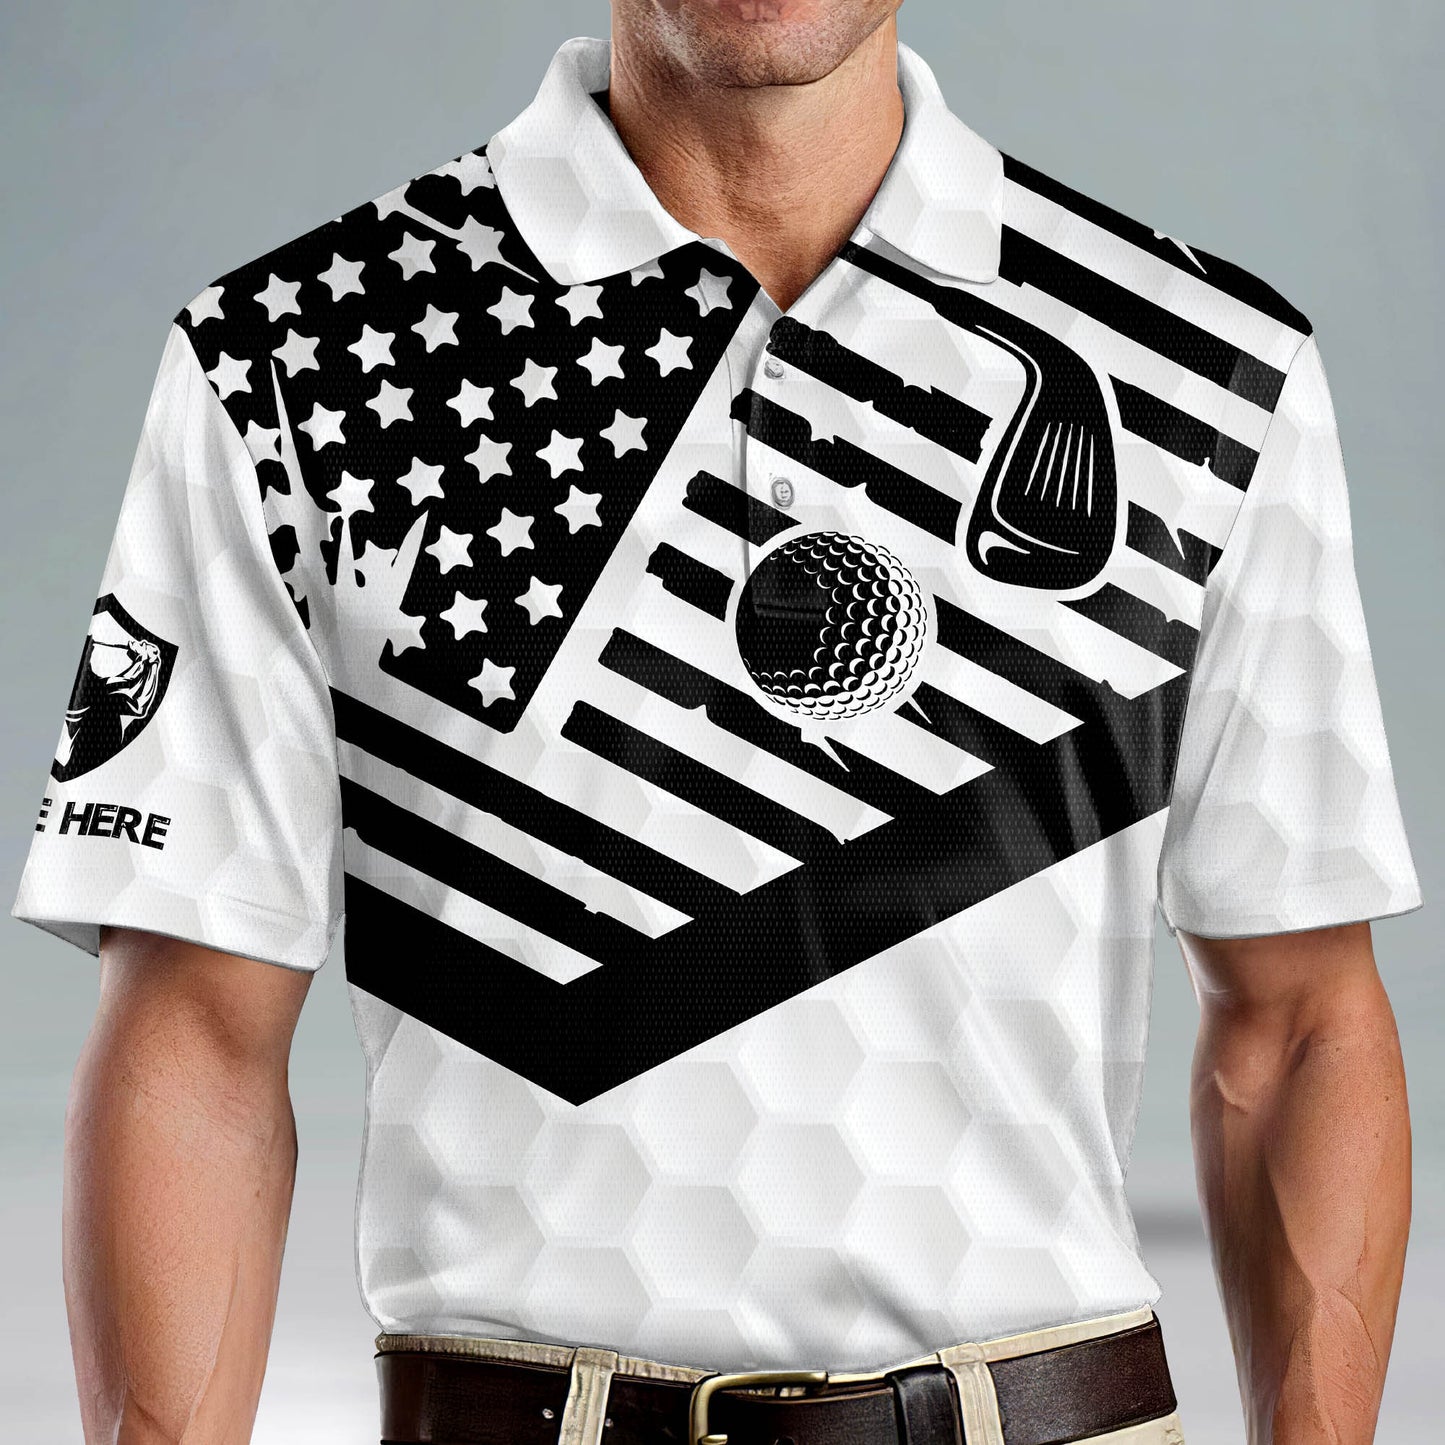 I'd Tap That Golf Polo Shirt GM0110